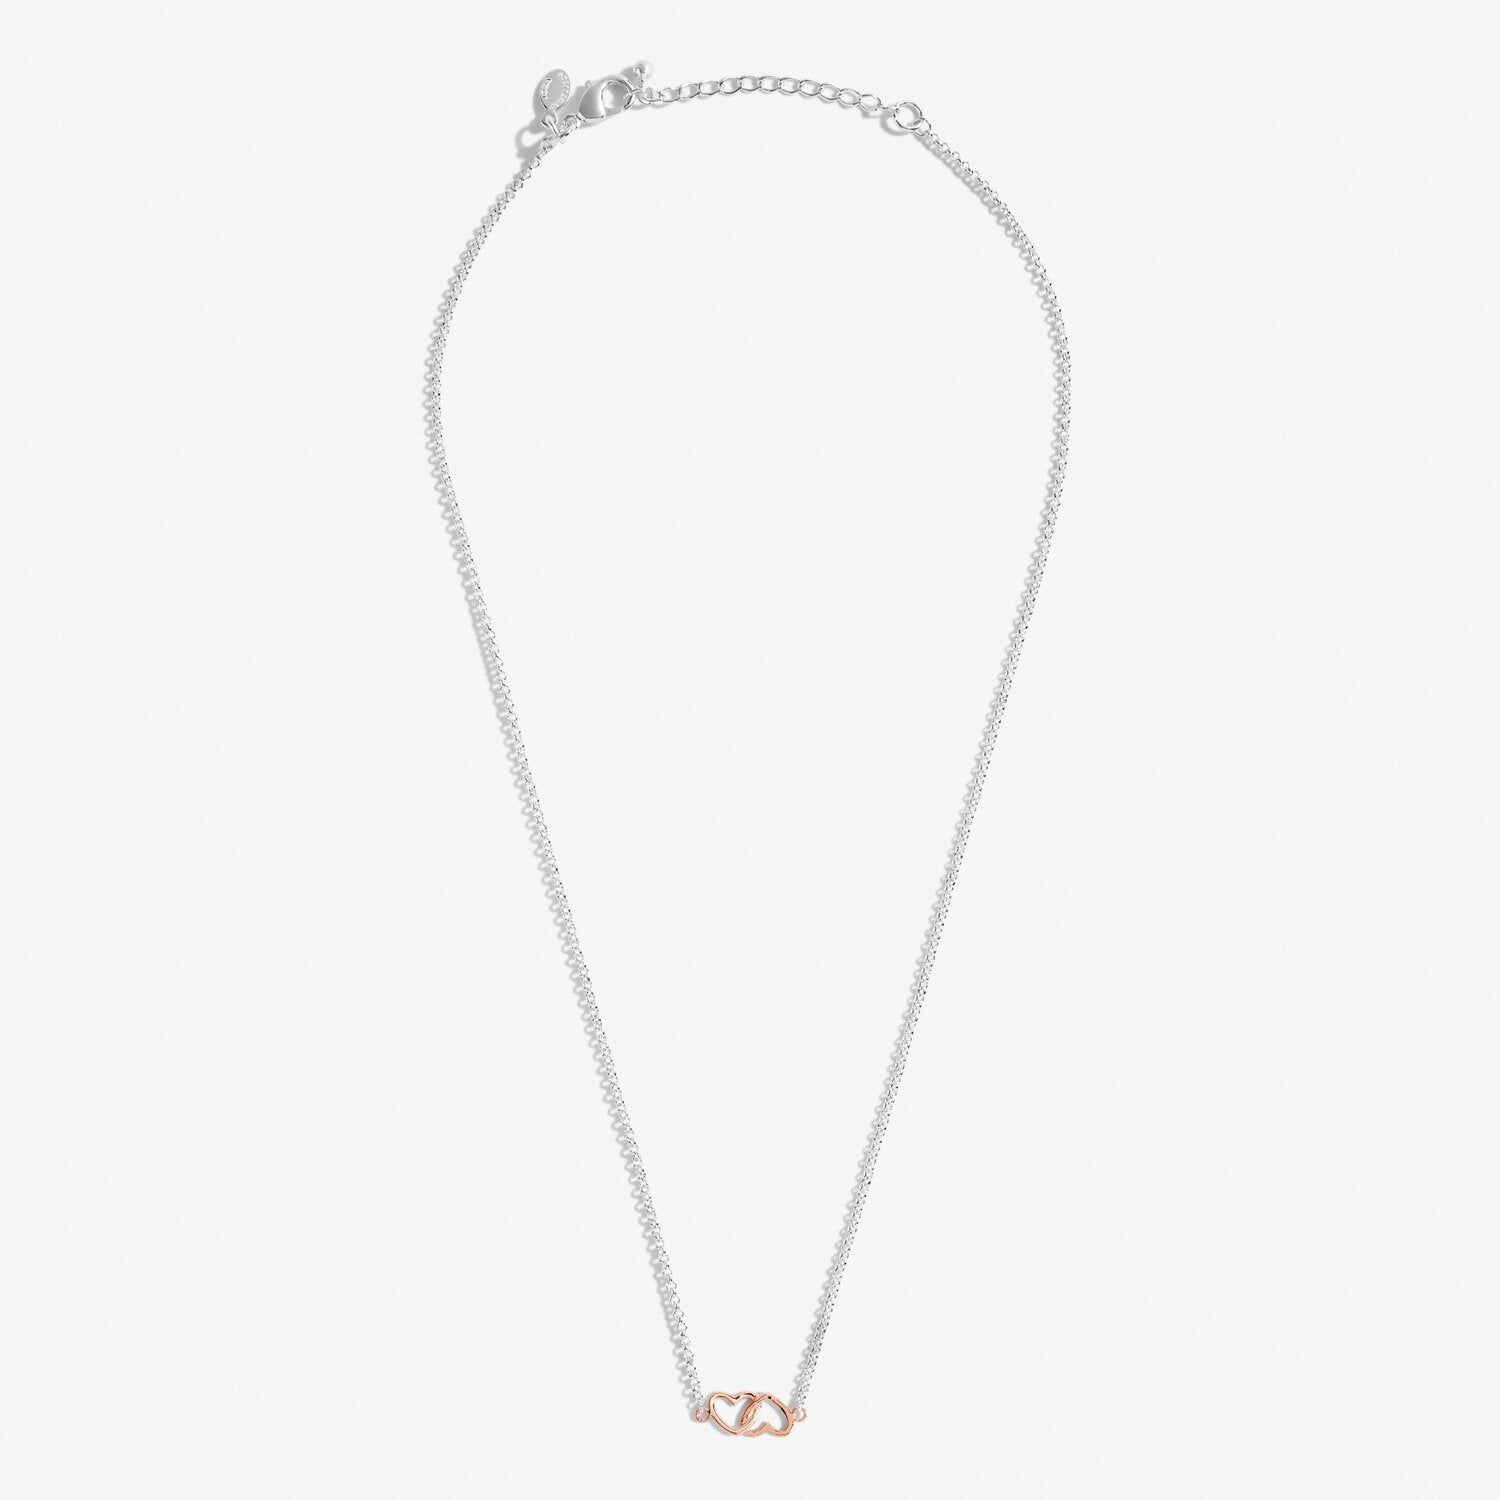 Joma Jewellery A Little 'Beautiful Friend' Necklace